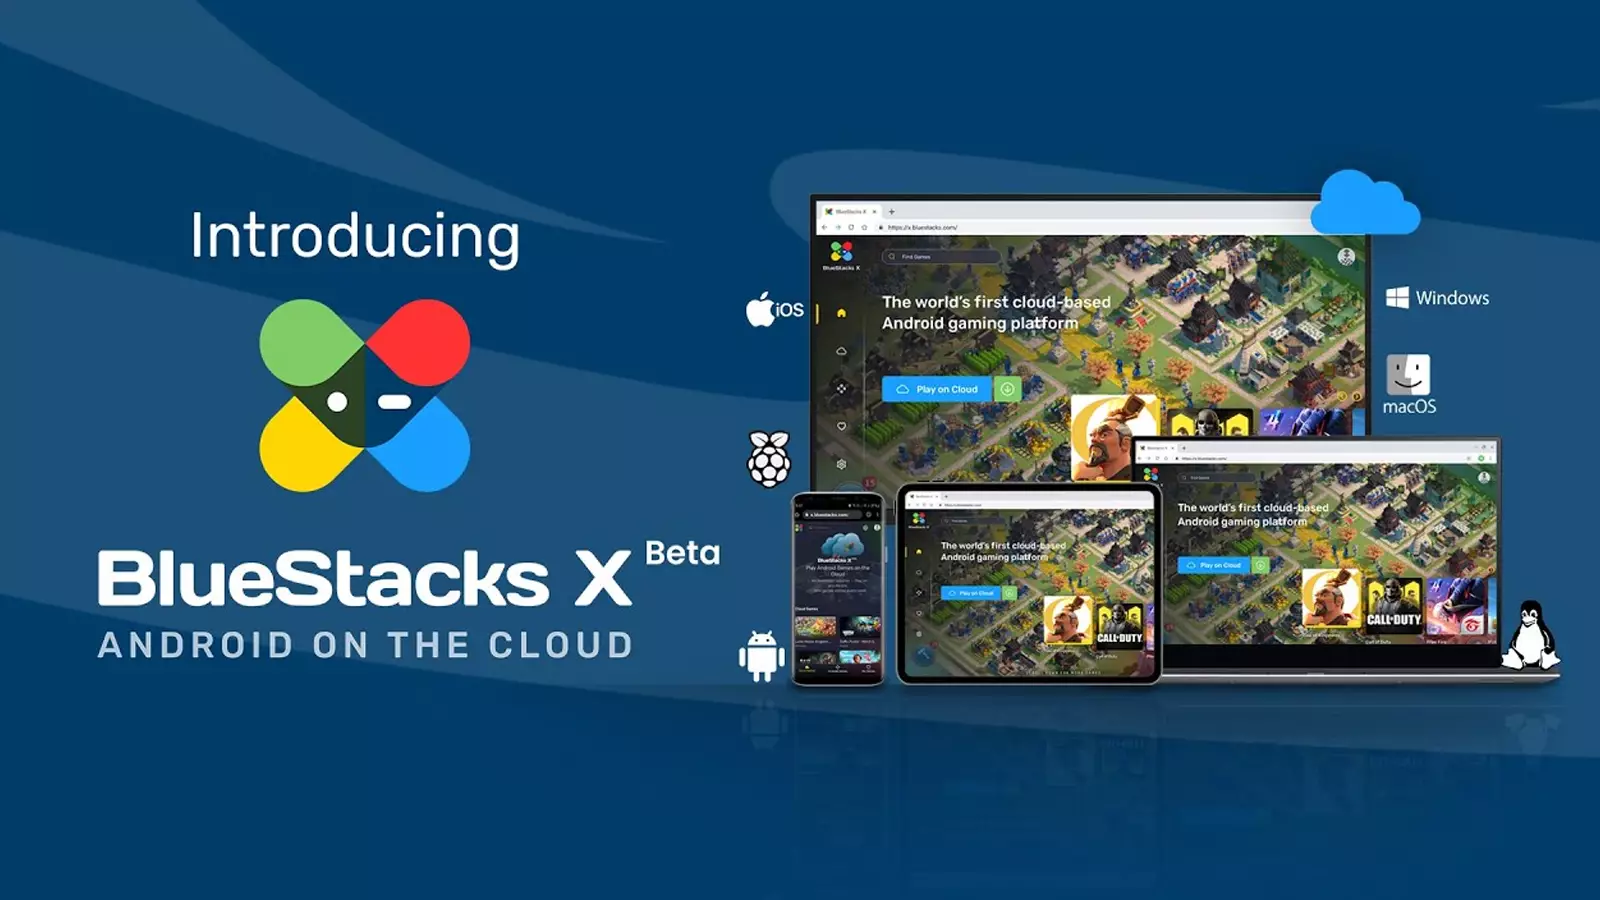 bluestacks 10 x announcement screenshot showing cloud gaming